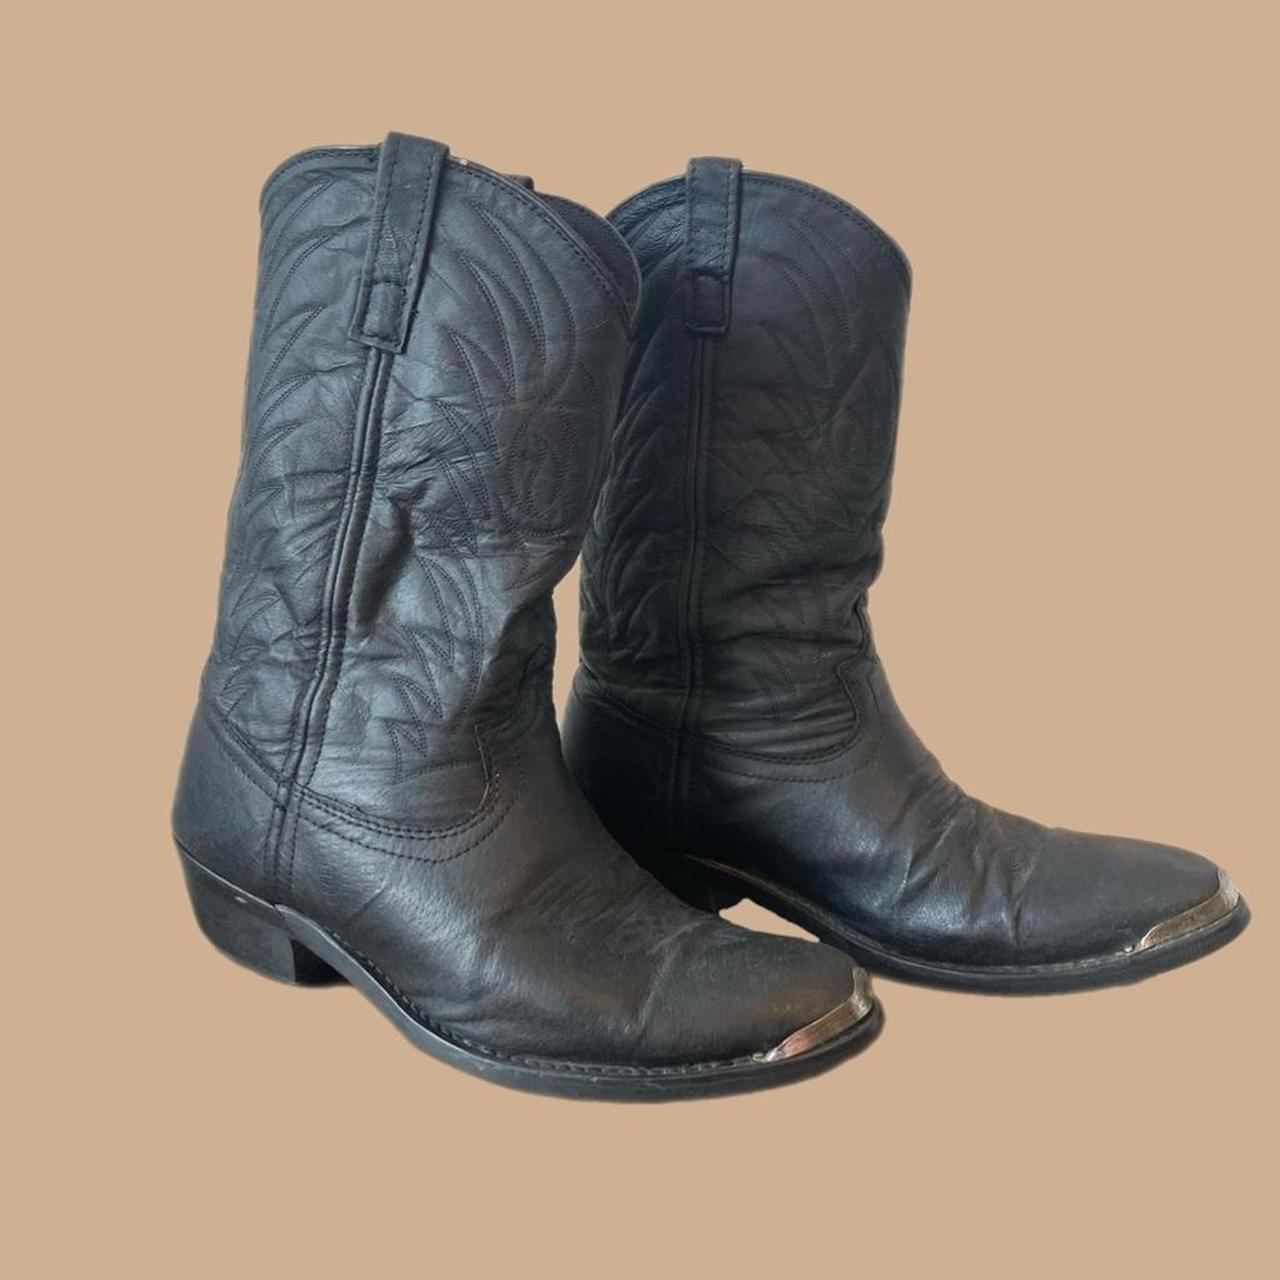 Men’s Black Leather Vintage Cowboy Boots with Metal... - Depop